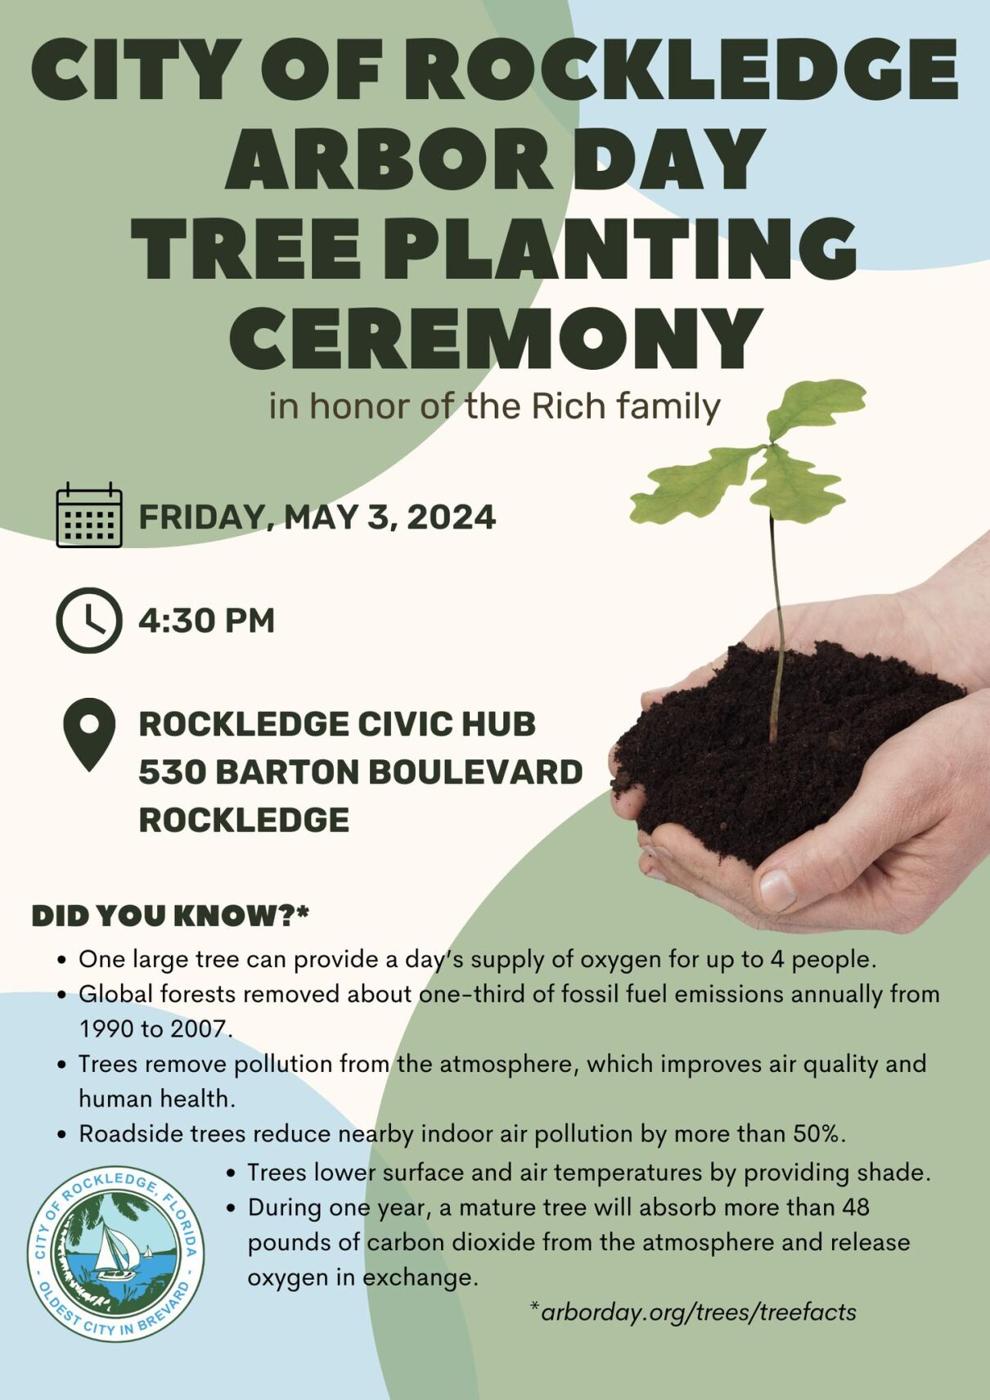 City of Rockledge Arbor Day Tree Planting Ceremony Calendar